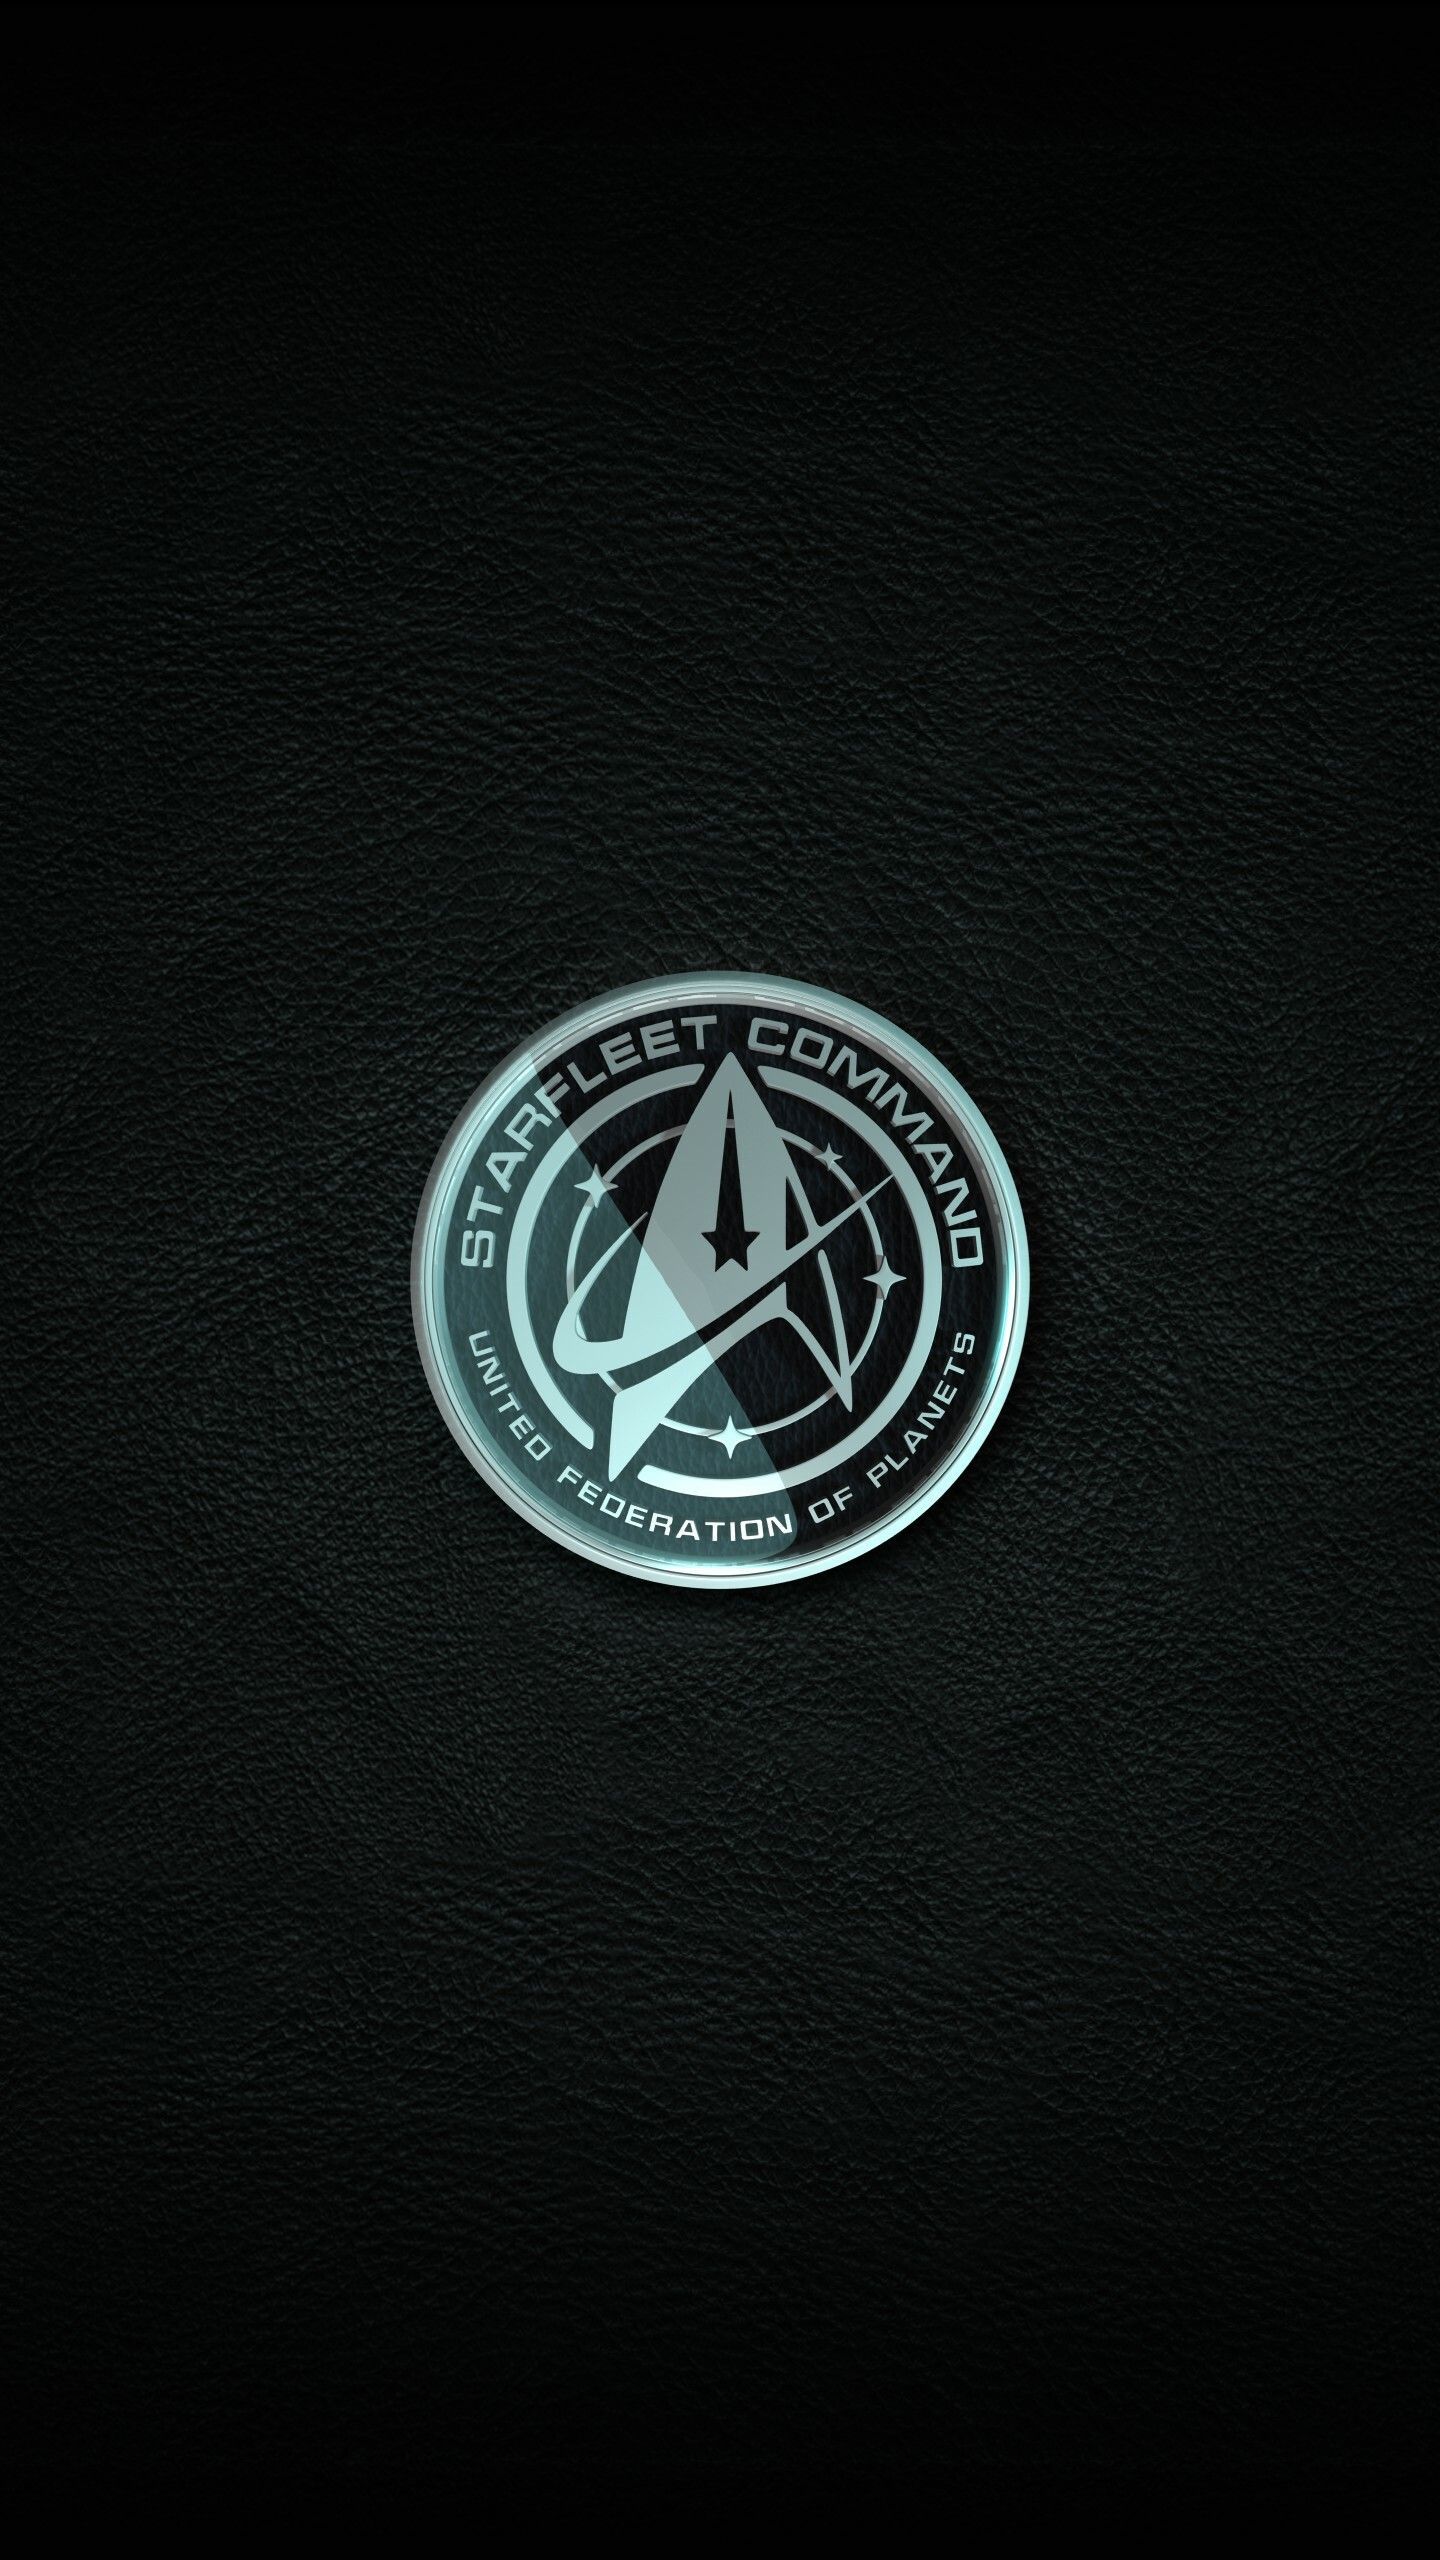 Star Trek Emblem Wallpaper Free .wallpaperaccess.com